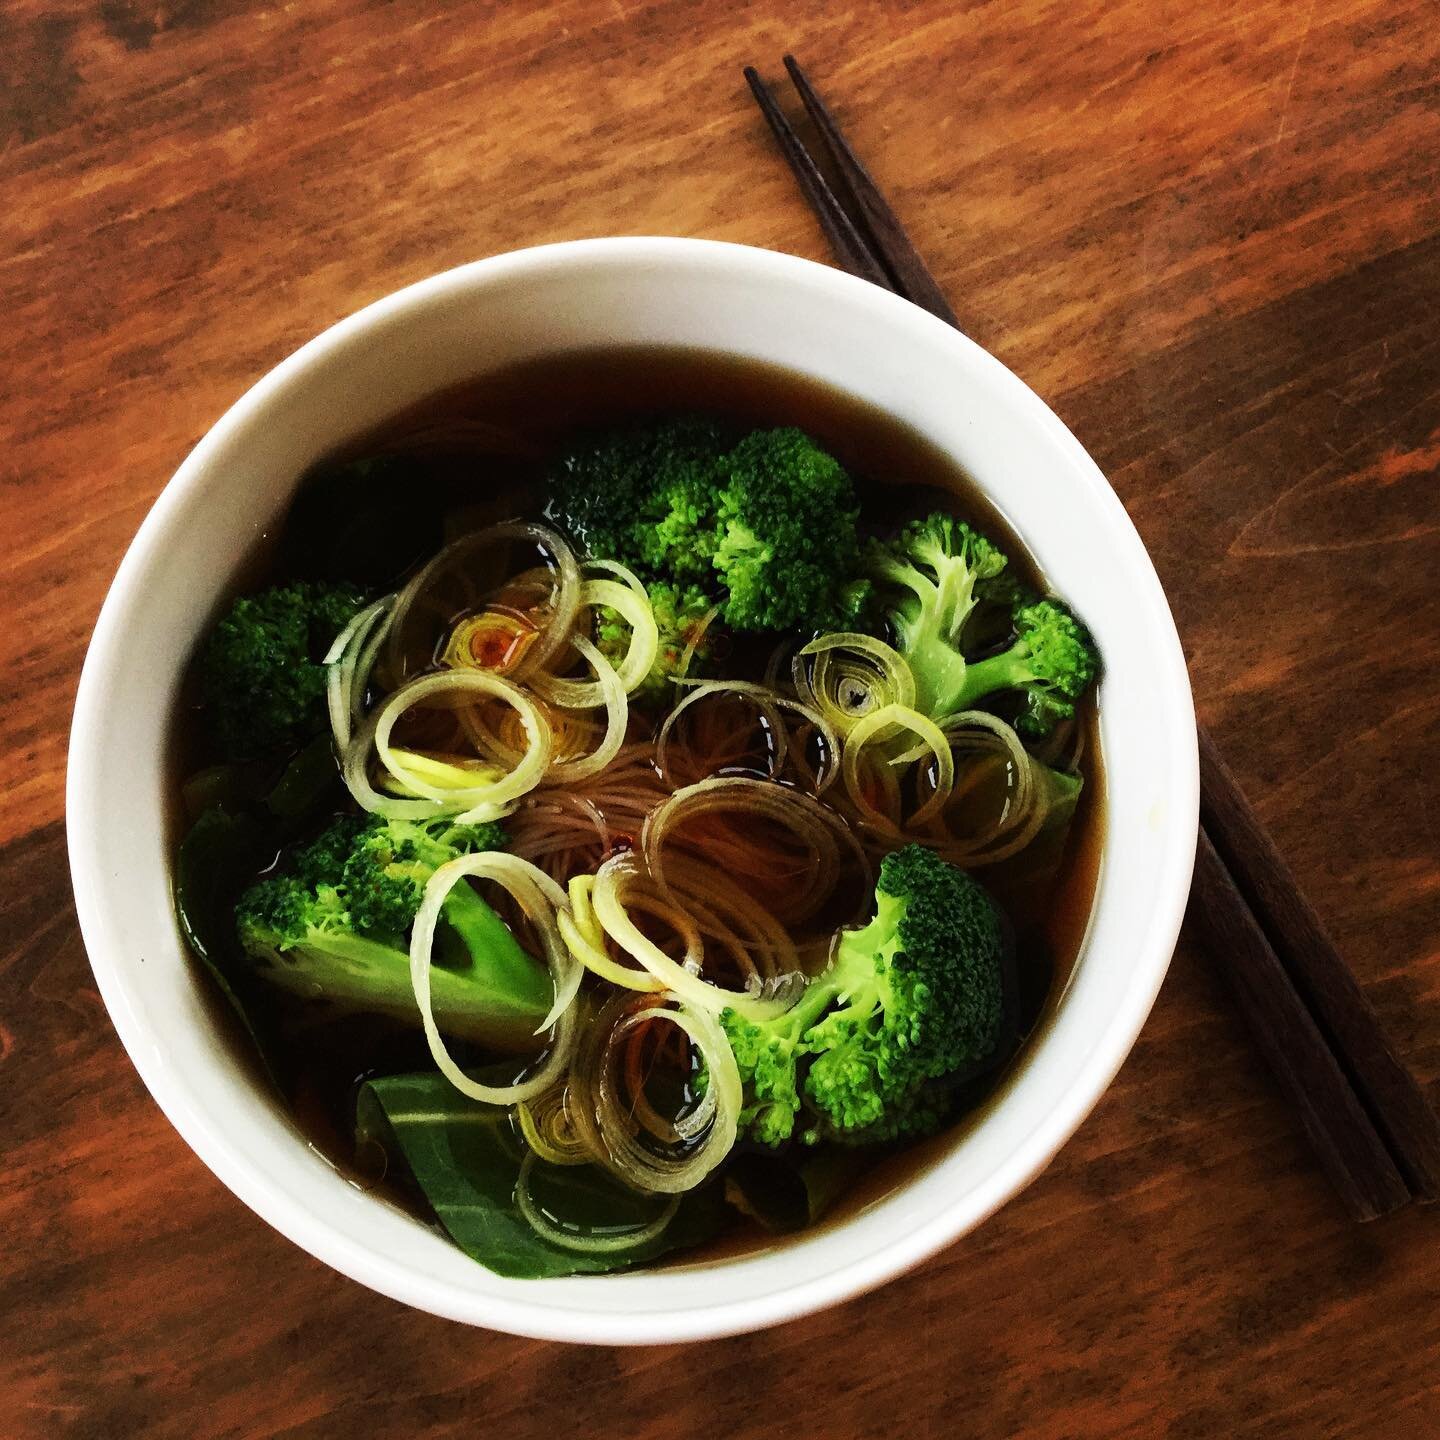 Soba, tsuyu, broccoli, greens and pickled shallot

#feelgoodfood #healthyeating #vegan #vegetables #vitaminc #japanese #longevity #soup #broth #fillingfood #lightfood #umami #japanesefood #japanesehomecooking